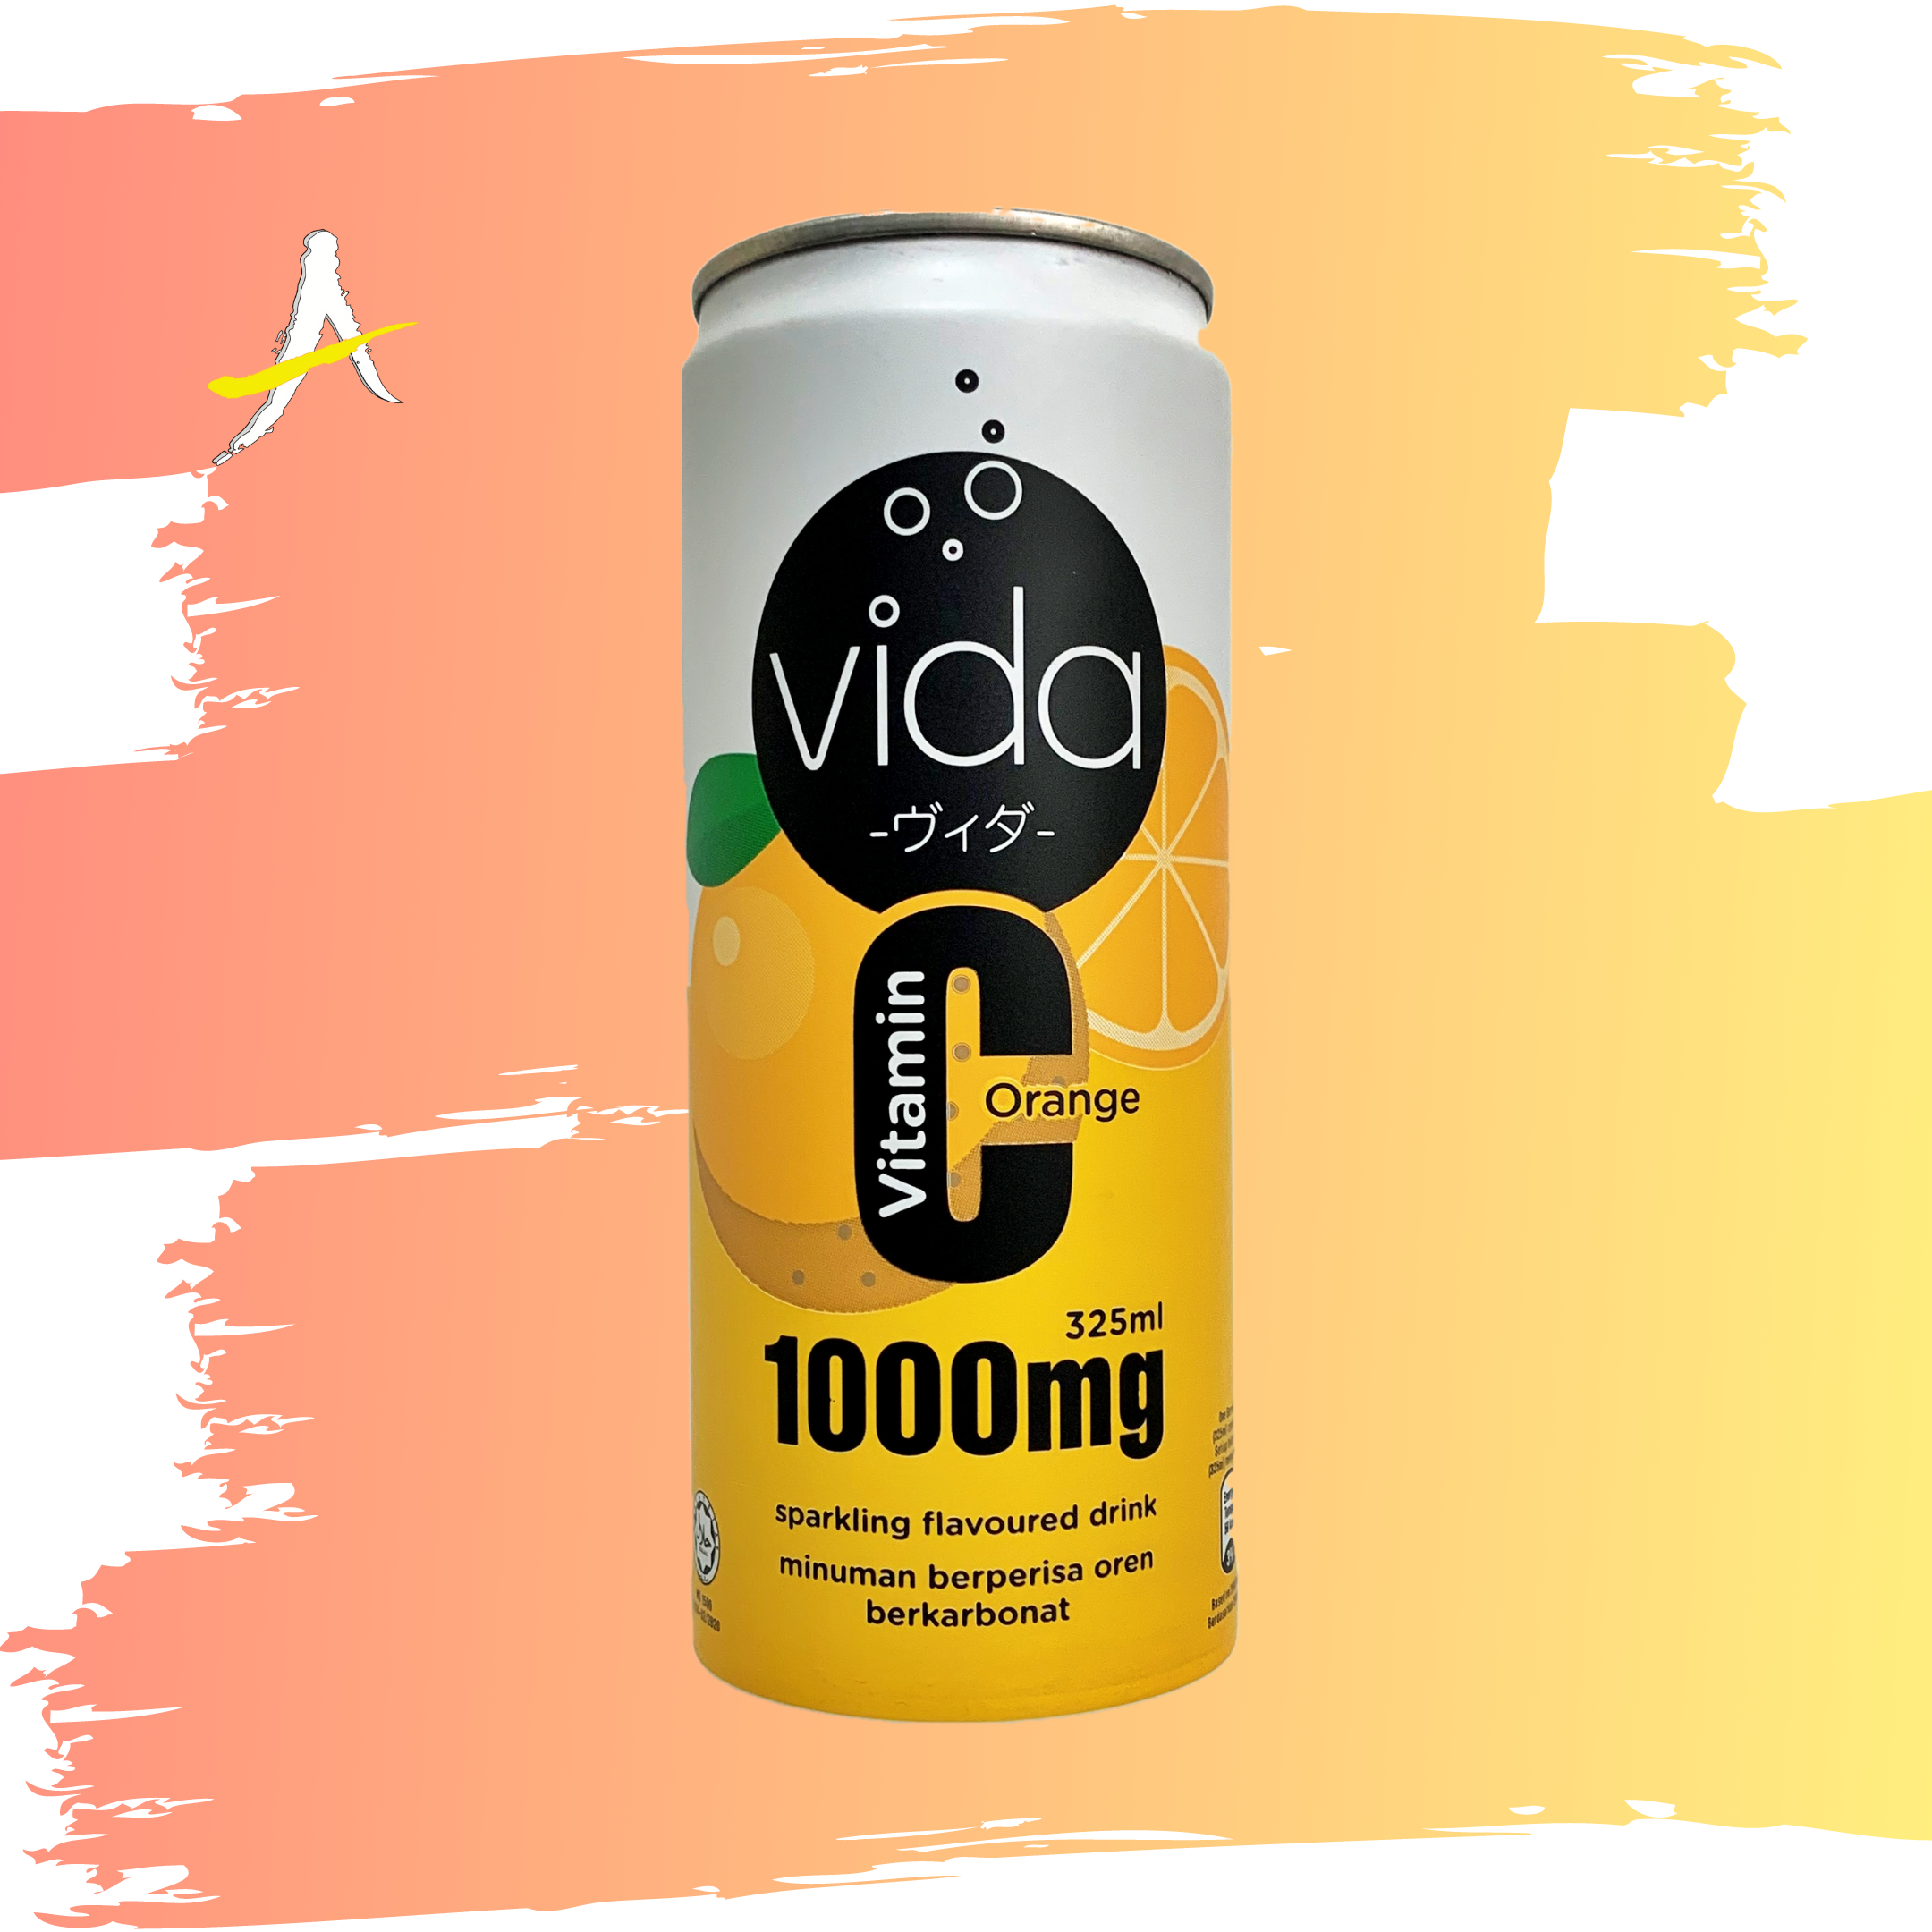 Buy Vida Vitamin C 1000mg Orange Flavour Sparkling Flavoured Drink 325ml Seetracker Malaysia